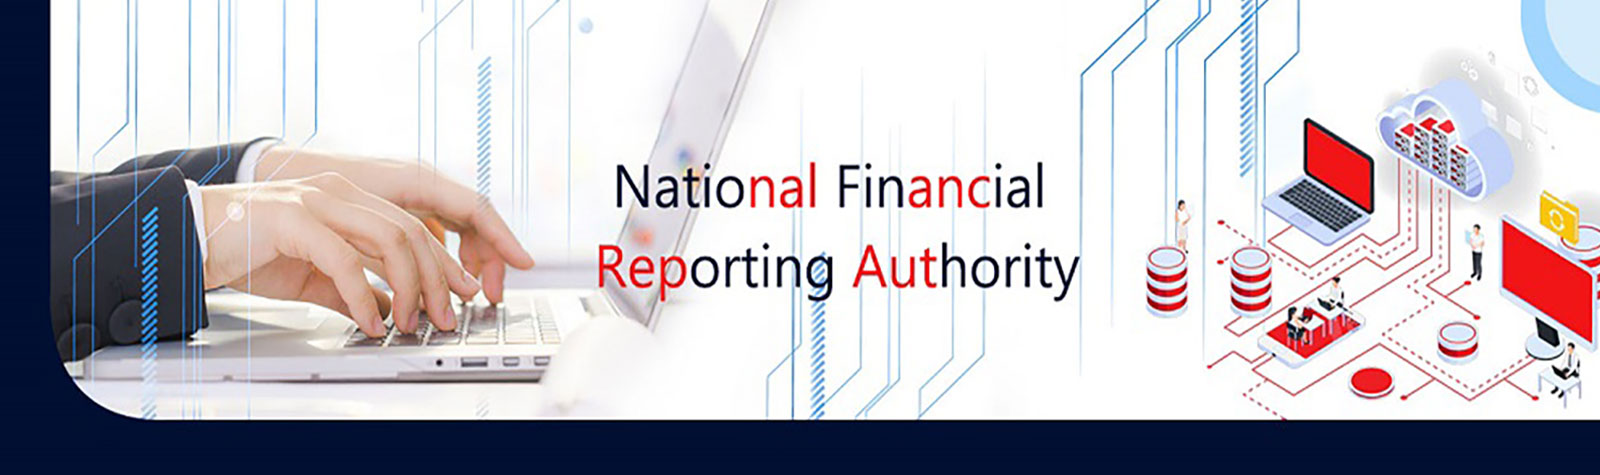 राष्ट्रीय वित्तीय रिपोर्टिंग प्राधिकरण